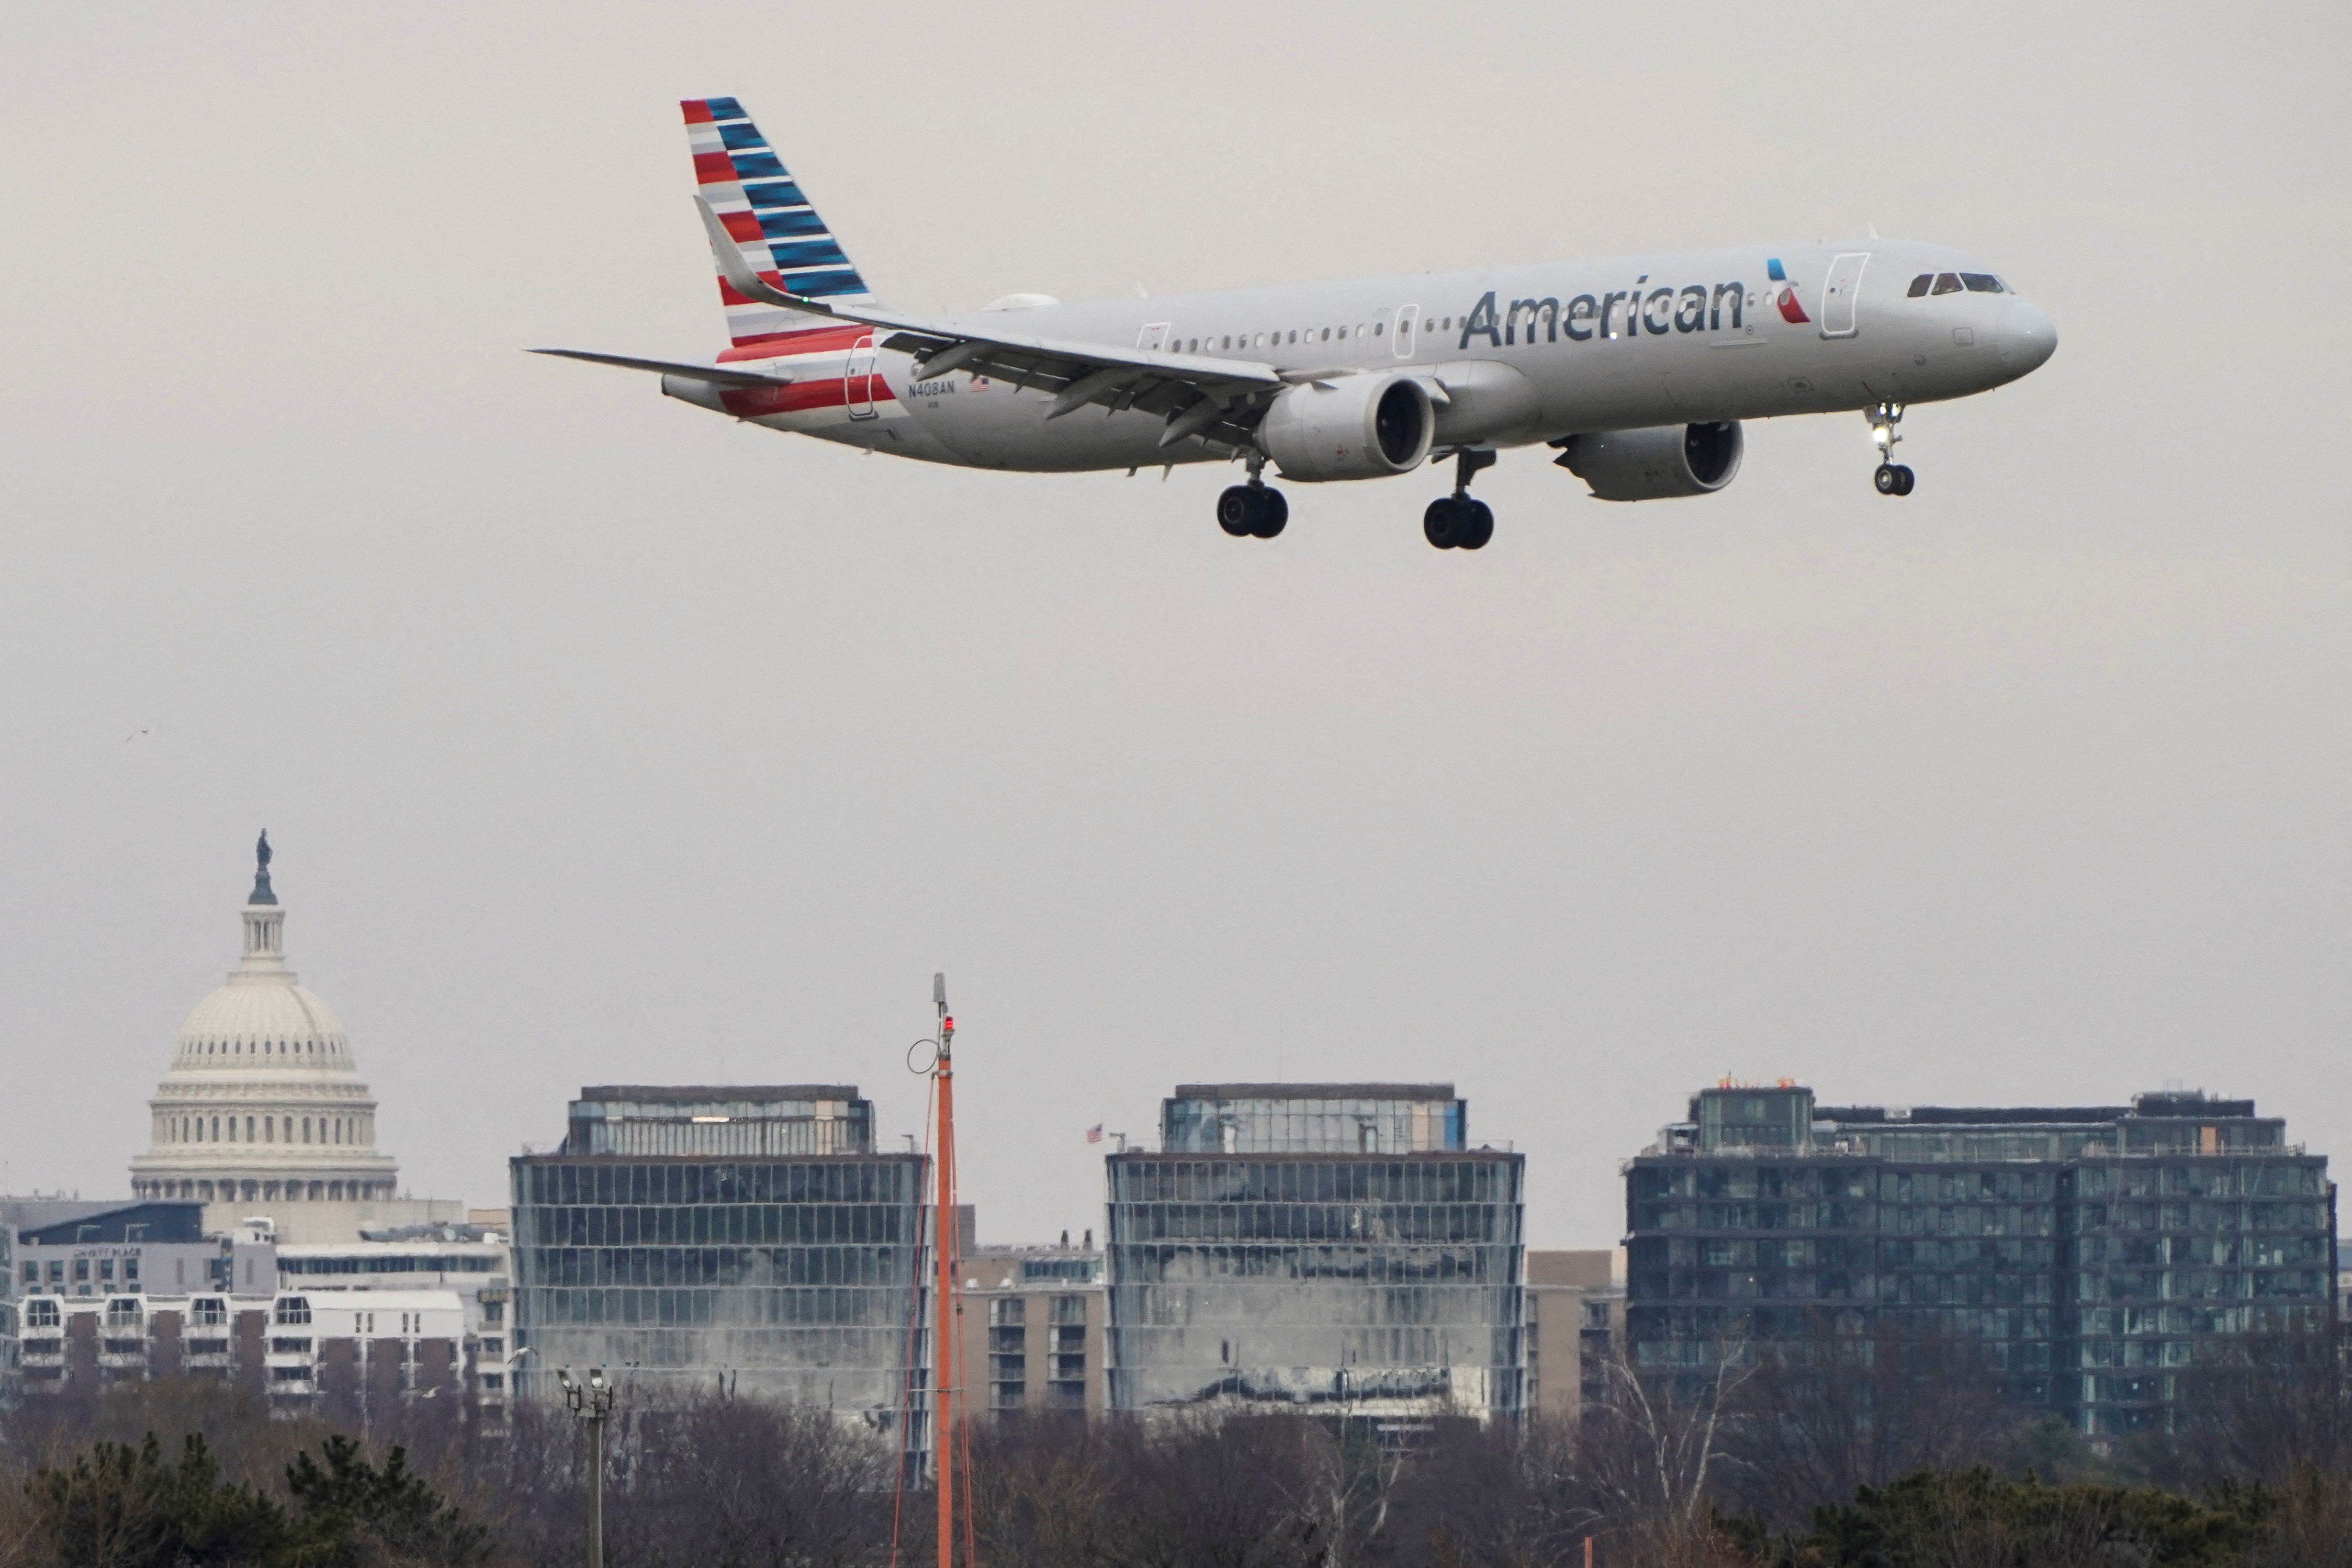 An American Airlines aircraft lands at Reagan National Airport in Arlington, Virginia